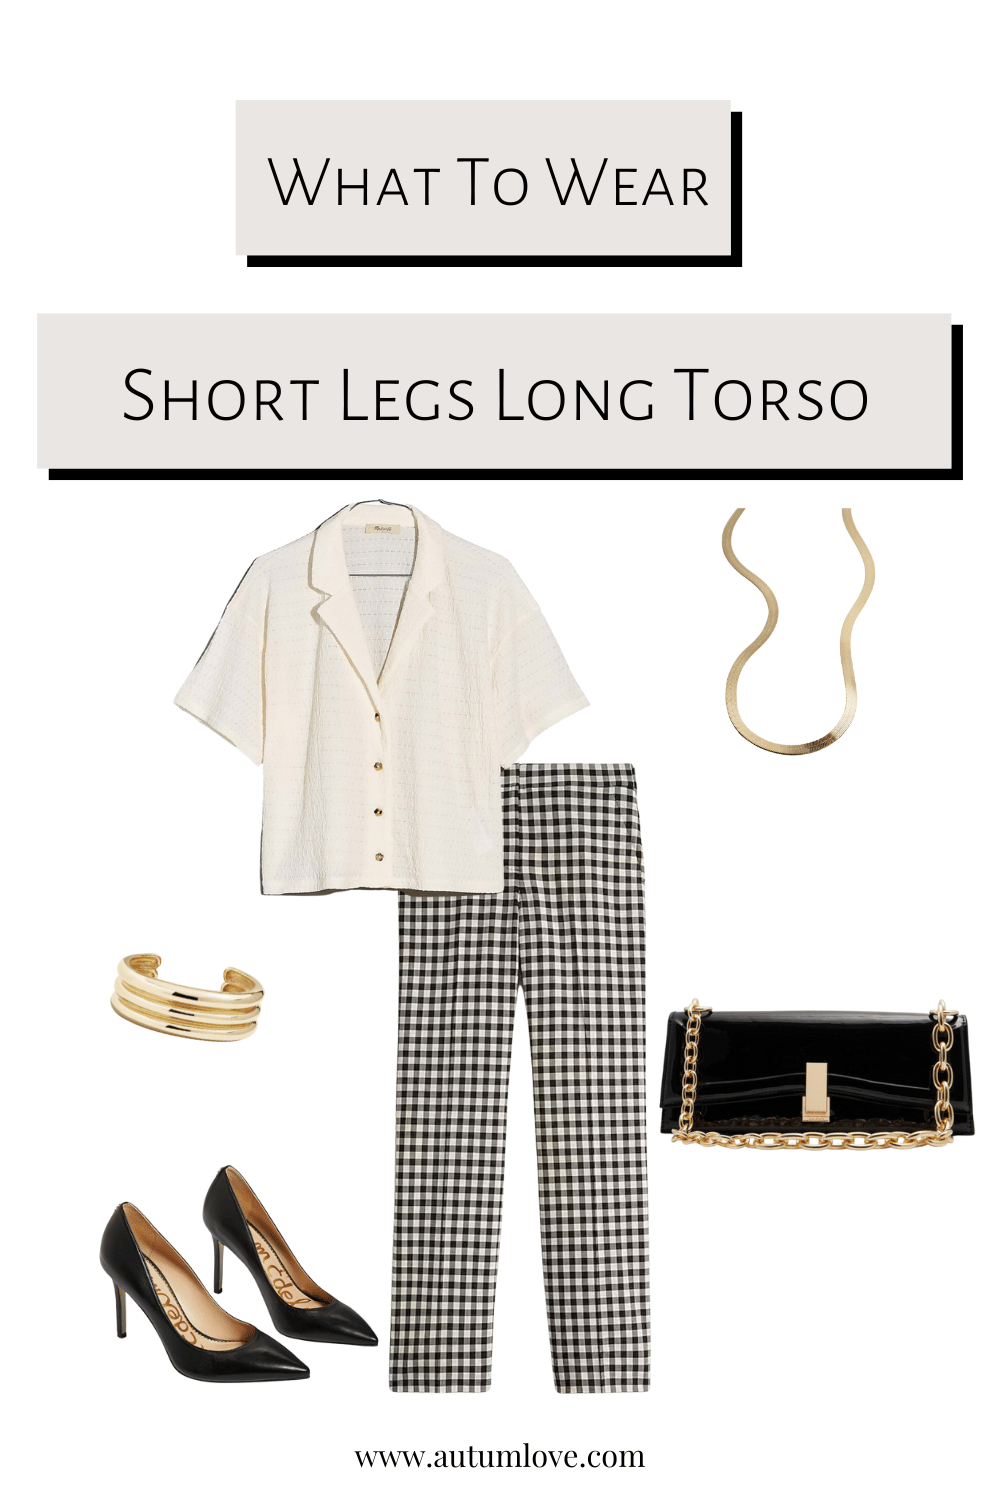 Short torso  Short dresses, Fashion, Short legs long torso